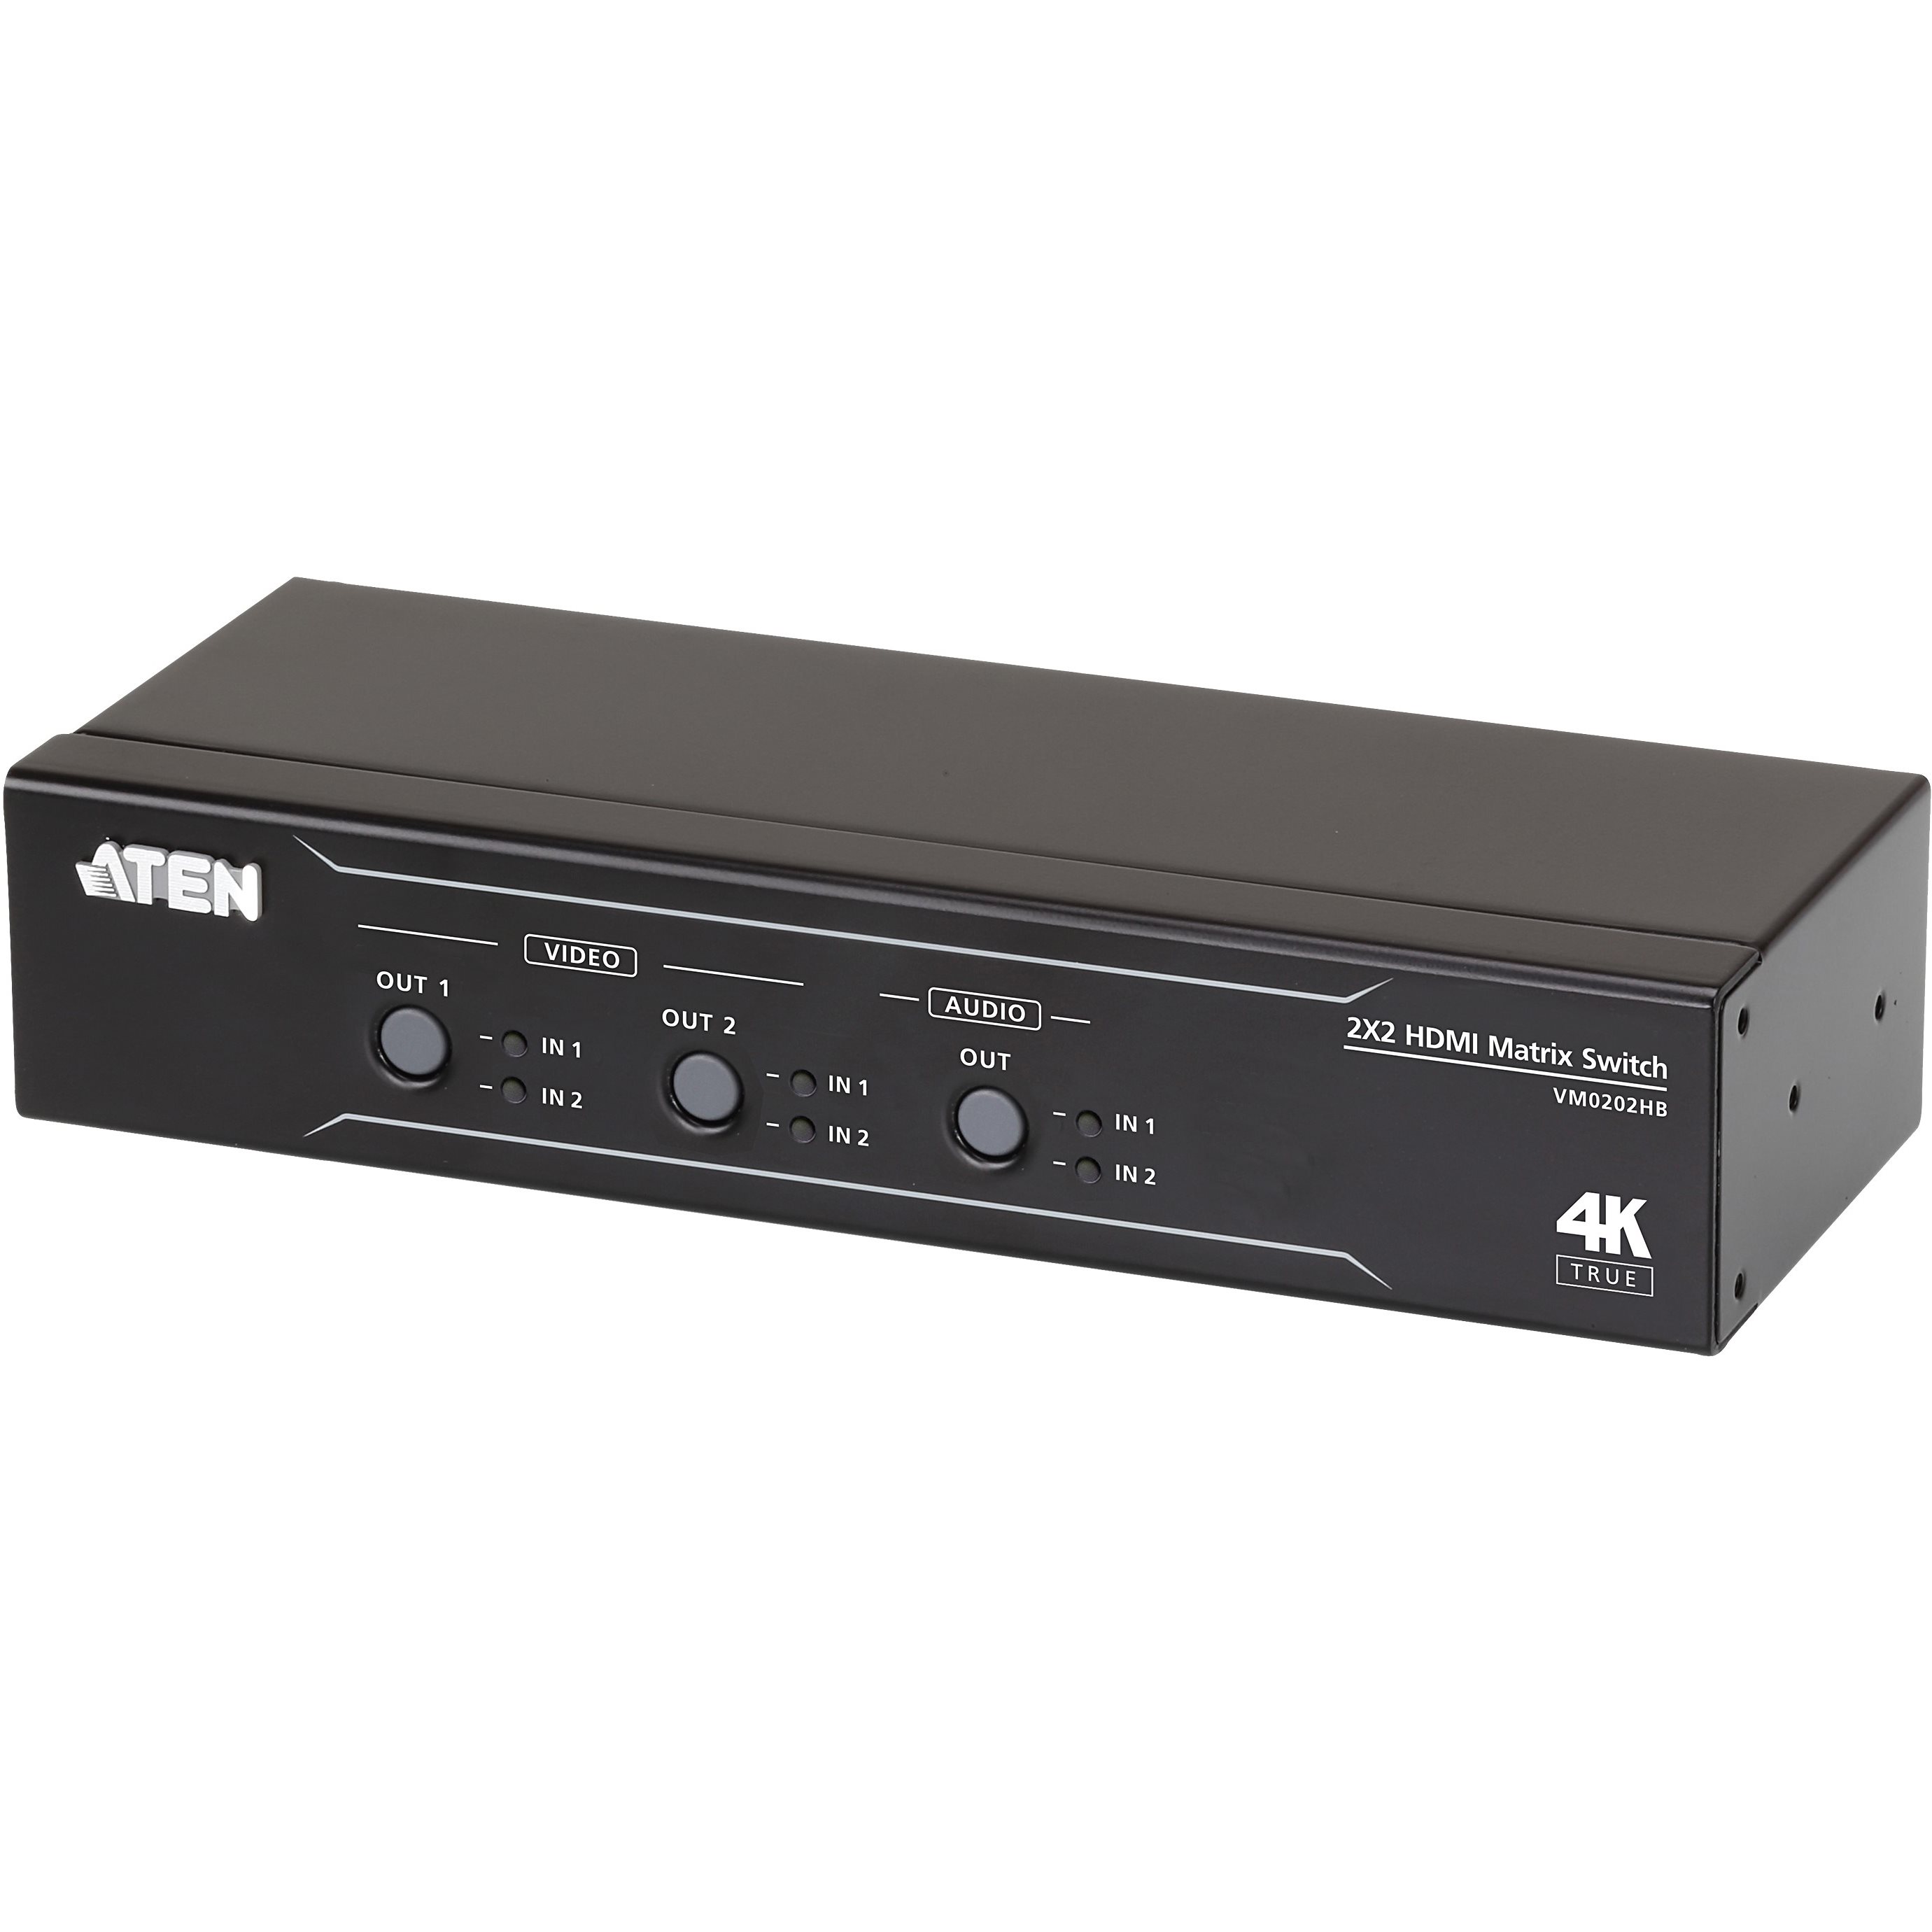   Vido splitter   Switch Matrix HDMI 4K 2x2 avec audio VM0202HB-AT-G